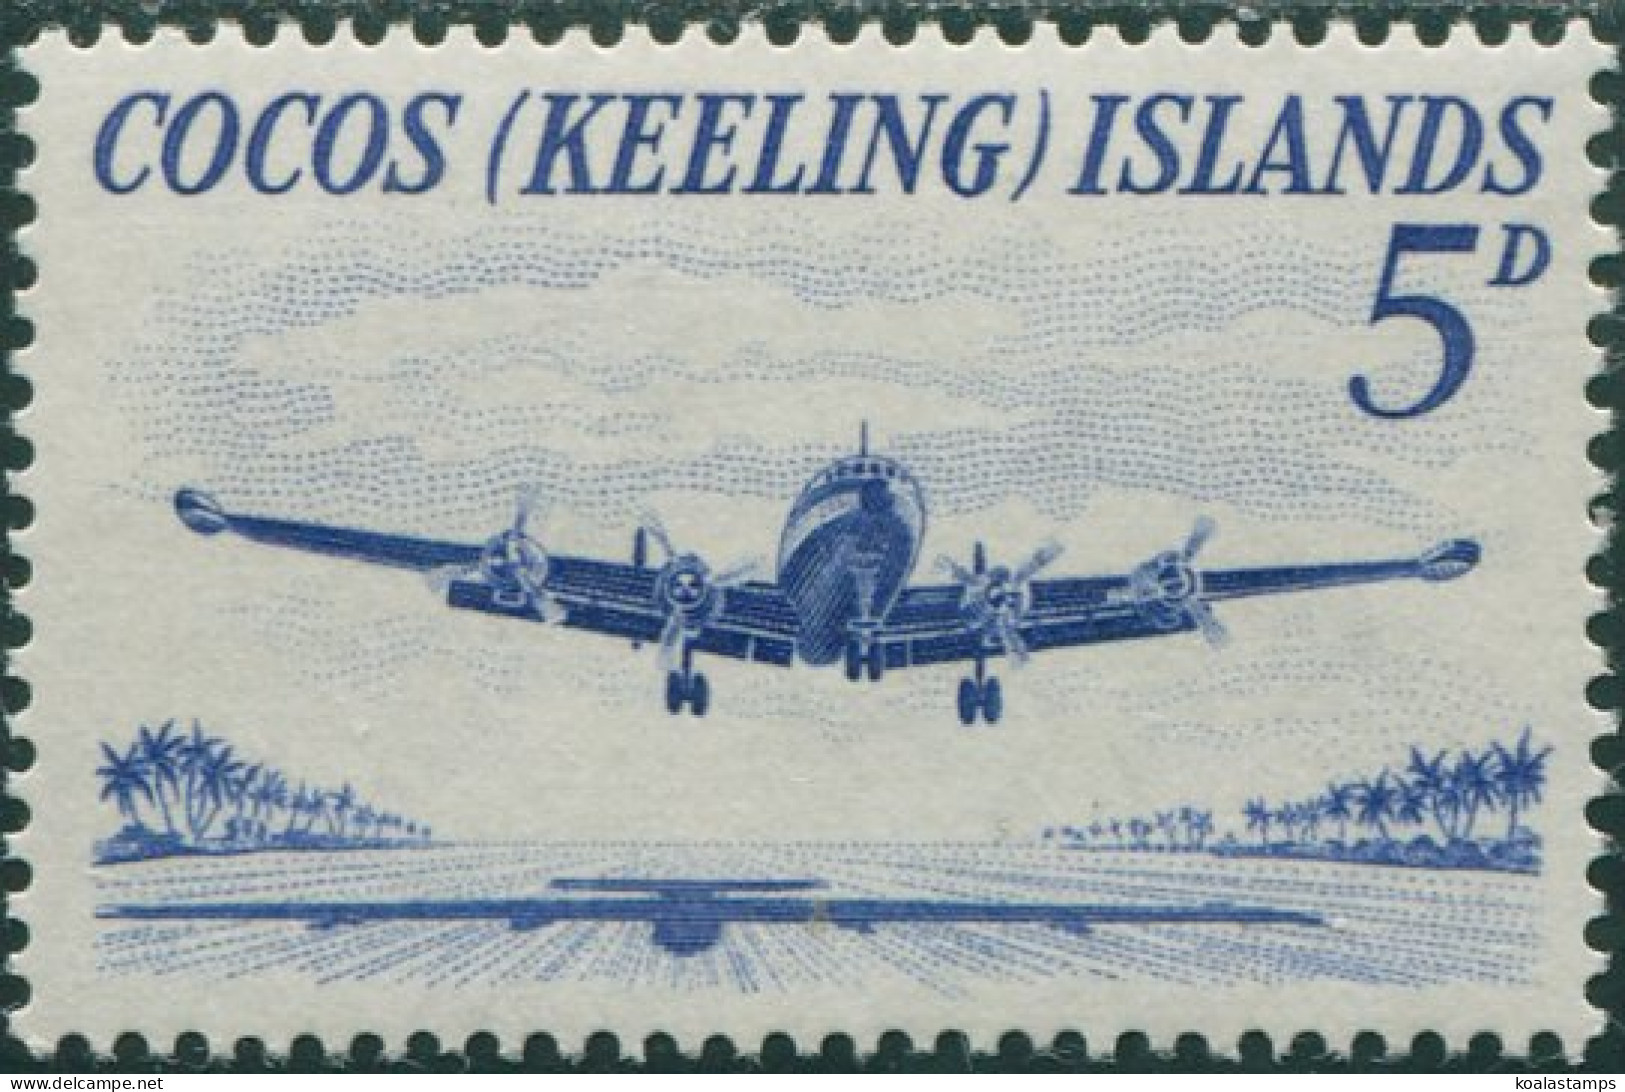 Cocos Islands 1963 SG2 5d Lockheed Airliner MNH - Cocos (Keeling) Islands